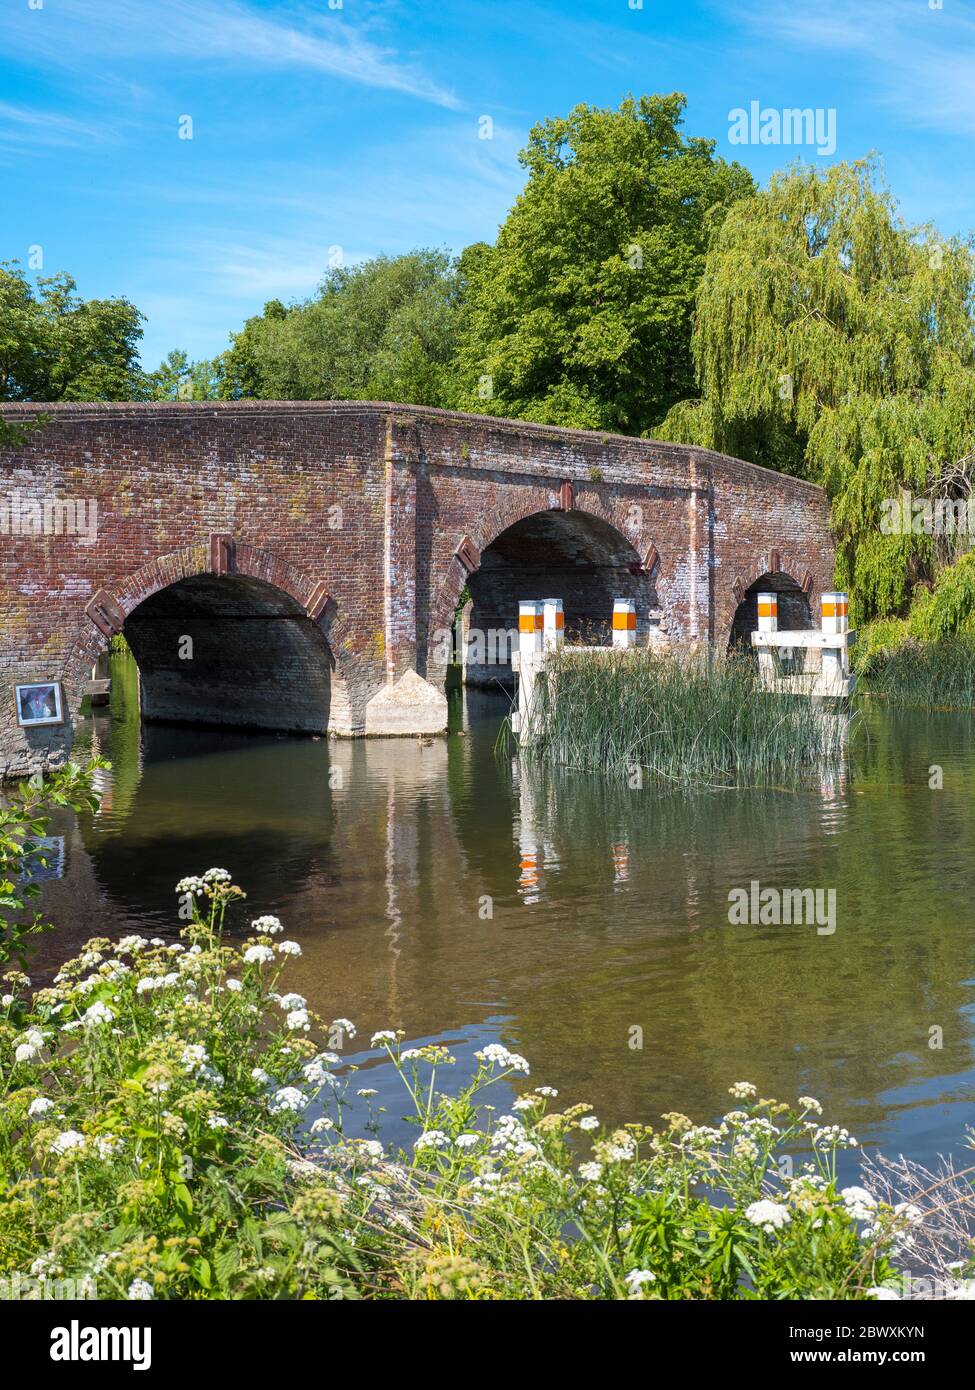 Spring time Landscape, Sonning Bridge, River Thames, Sonning, Reading, Berkshire, England, UK, GB. Stock Photo